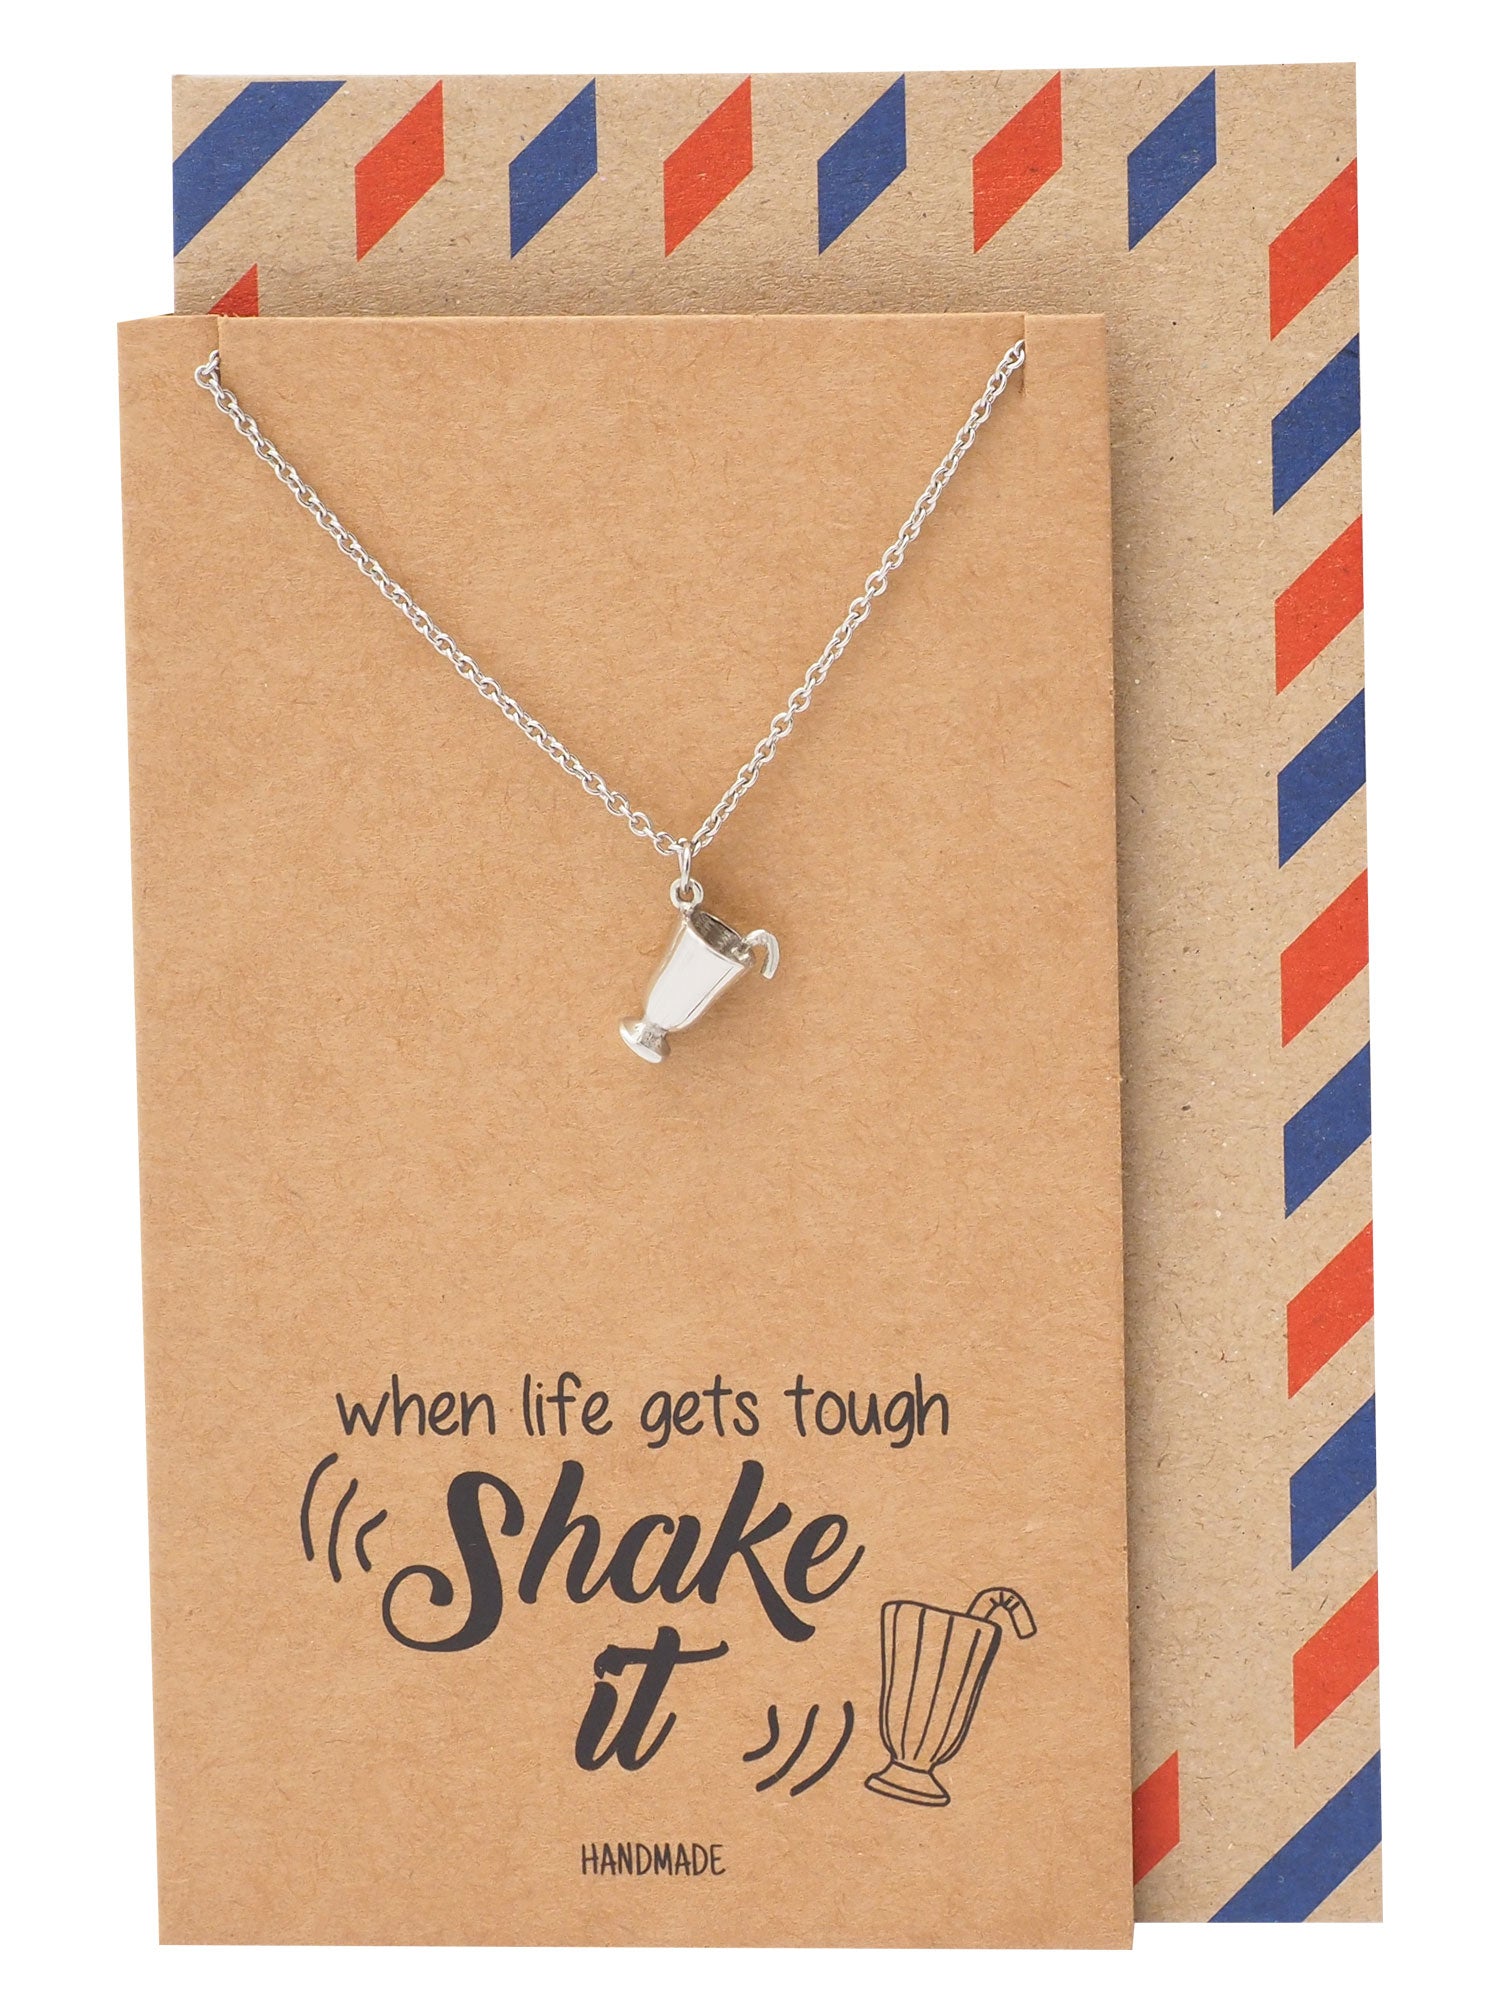 Shane Milkshake Necklace with Milkshake Charm Pendant for Women, Funny and Motivational Quote